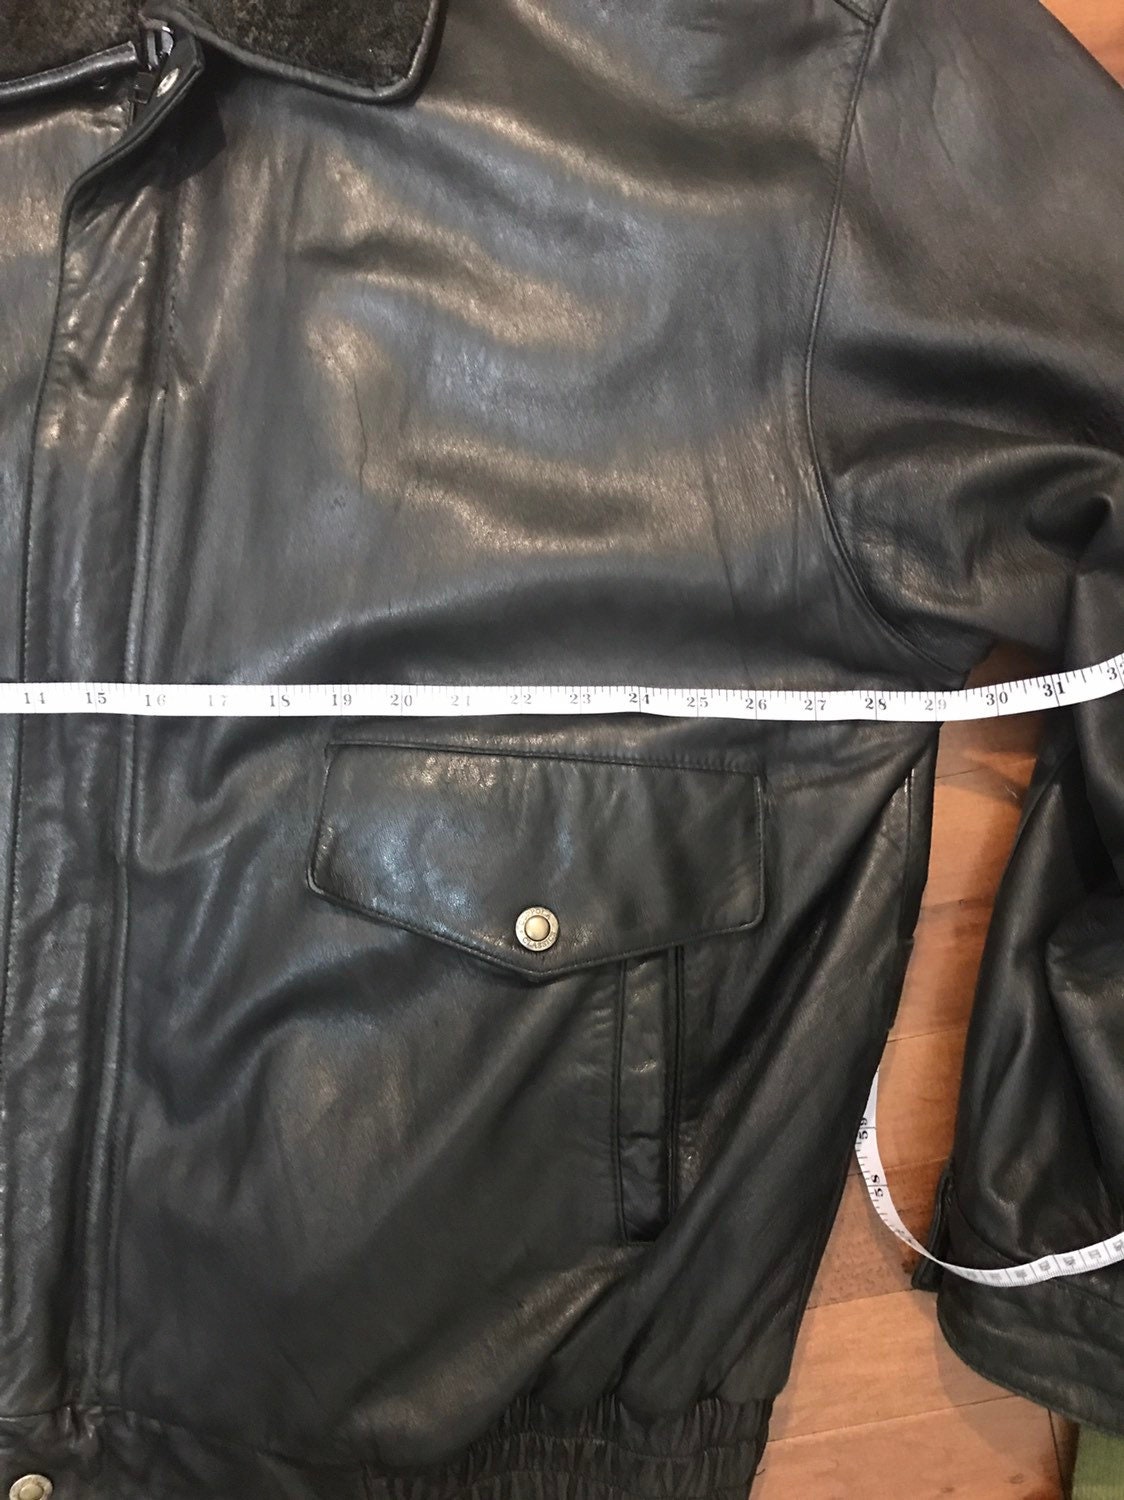 Vintage men's leather coat Cappola classic leather wear | Etsy